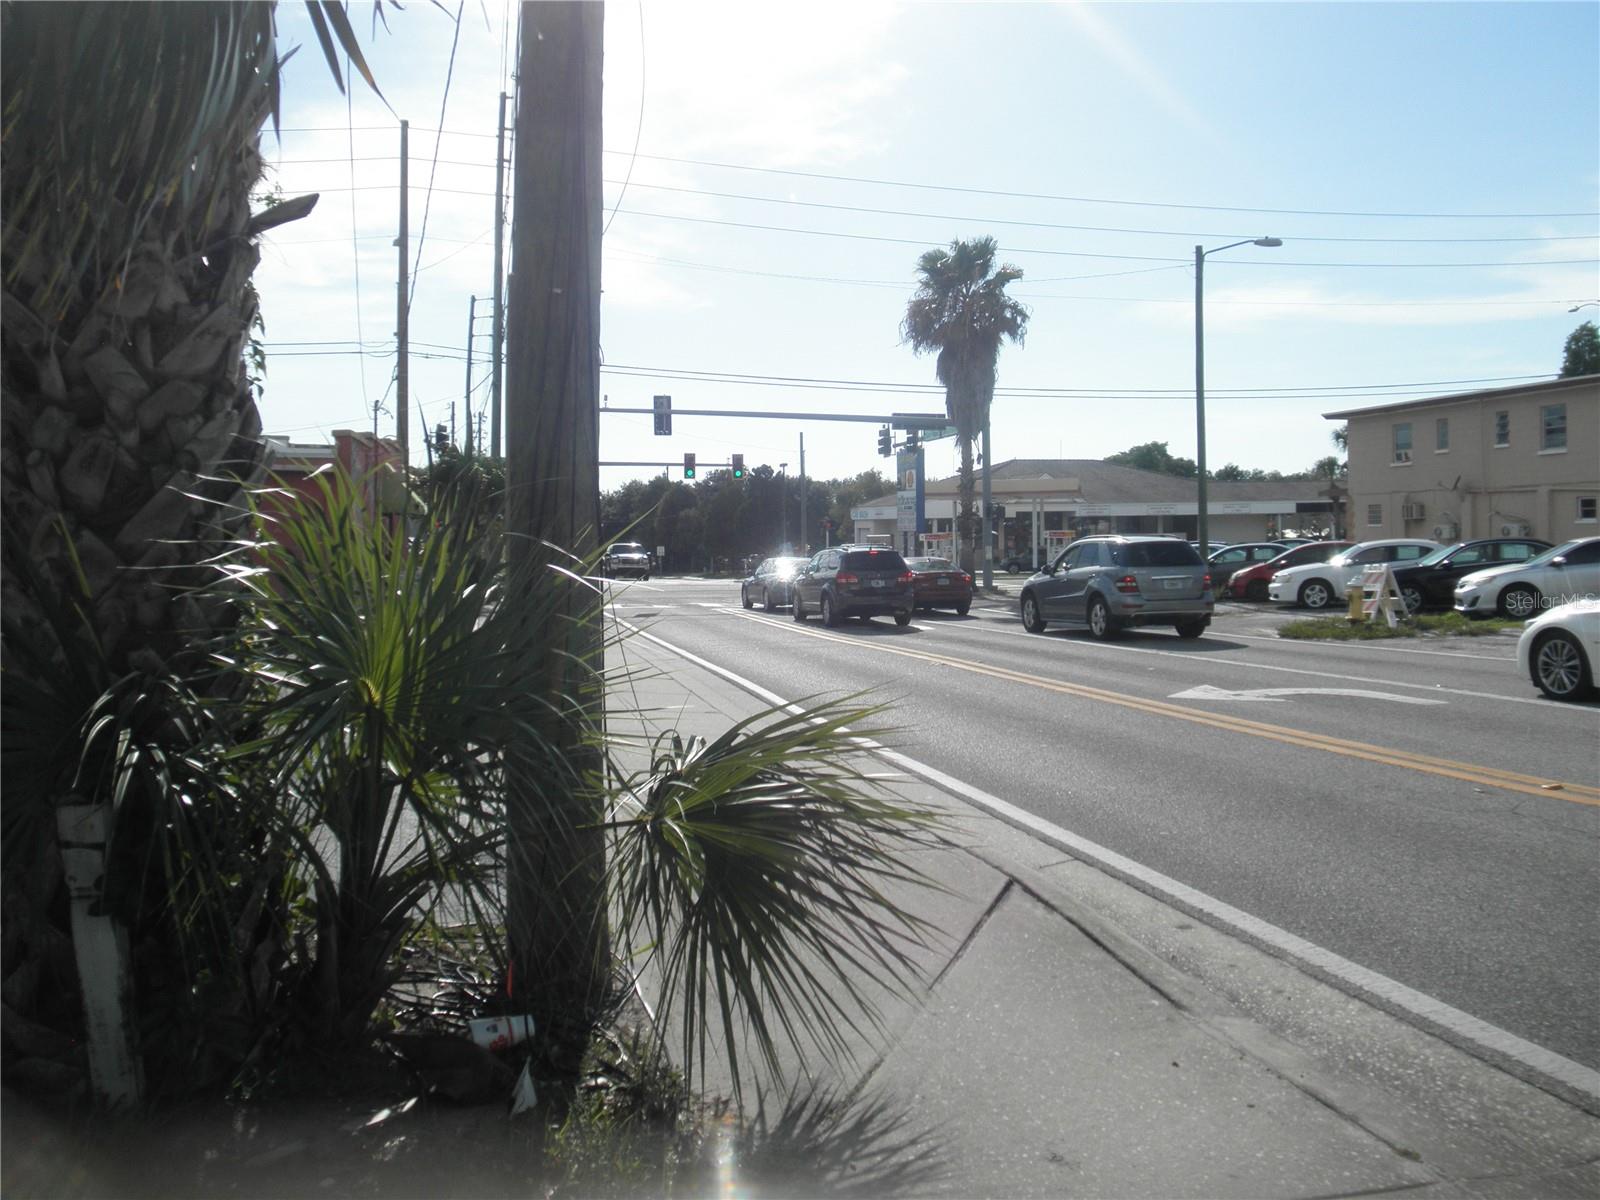 View of the Wyatt Street